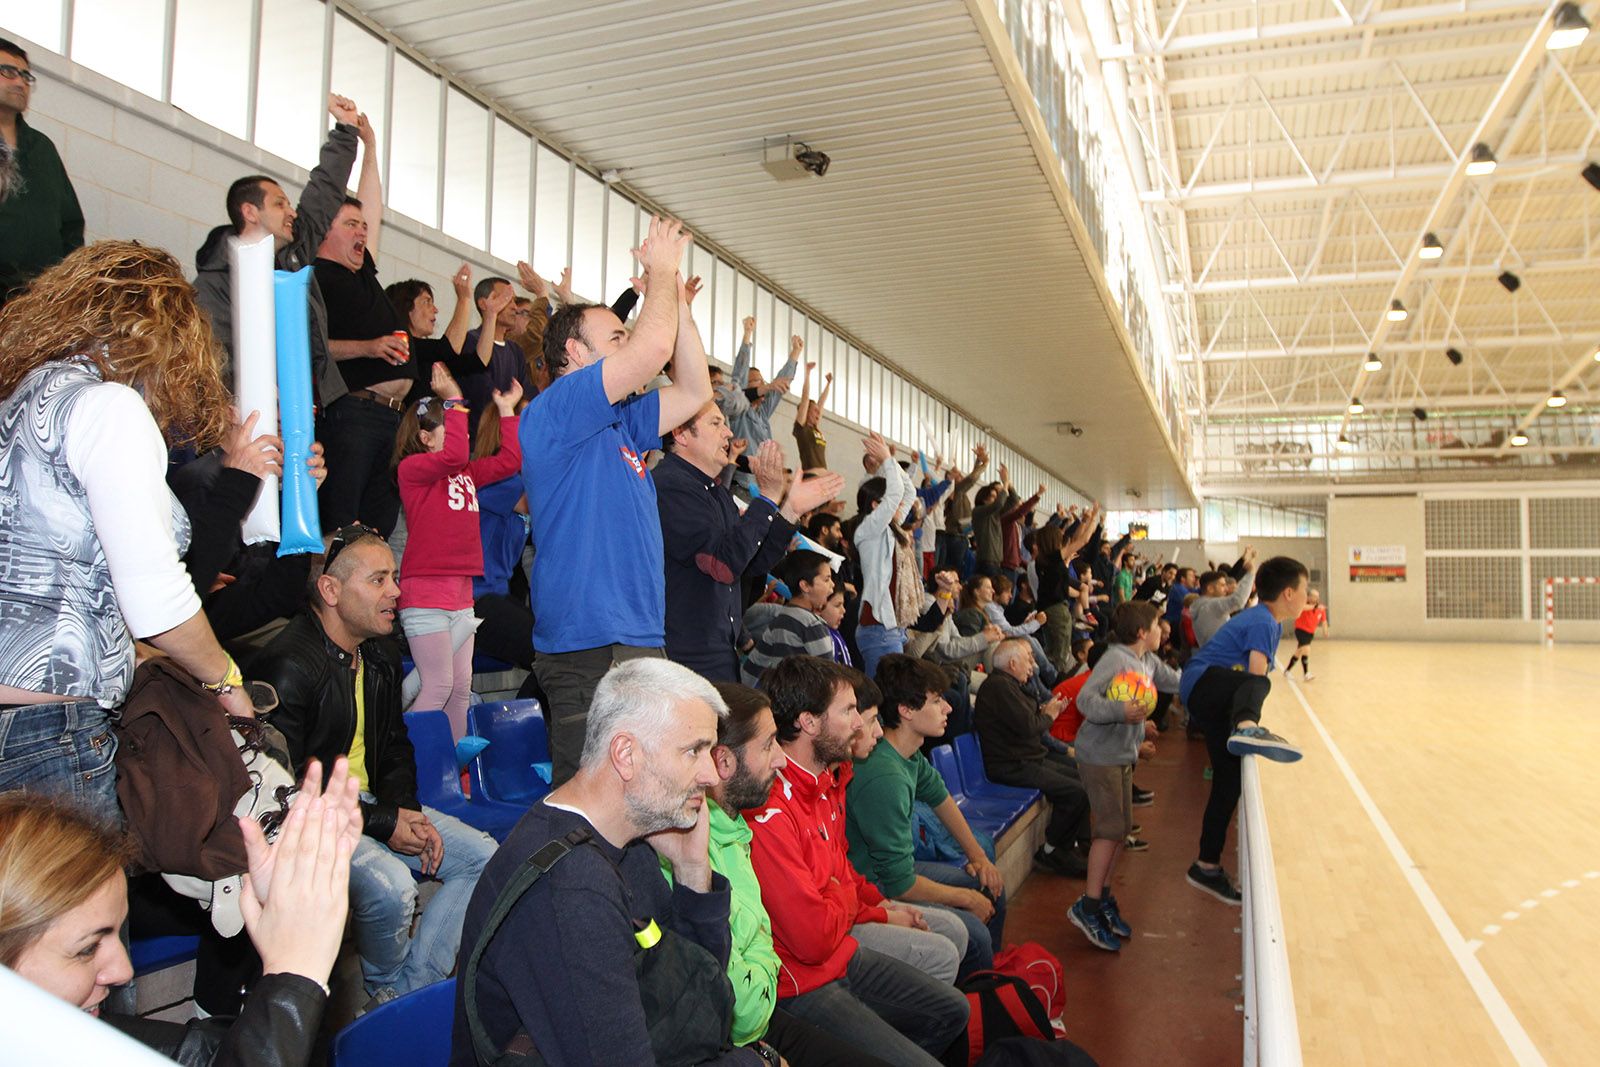 Unes 175 persones van donar suport a l'Olimpyc FOTO: Haidy Blanch